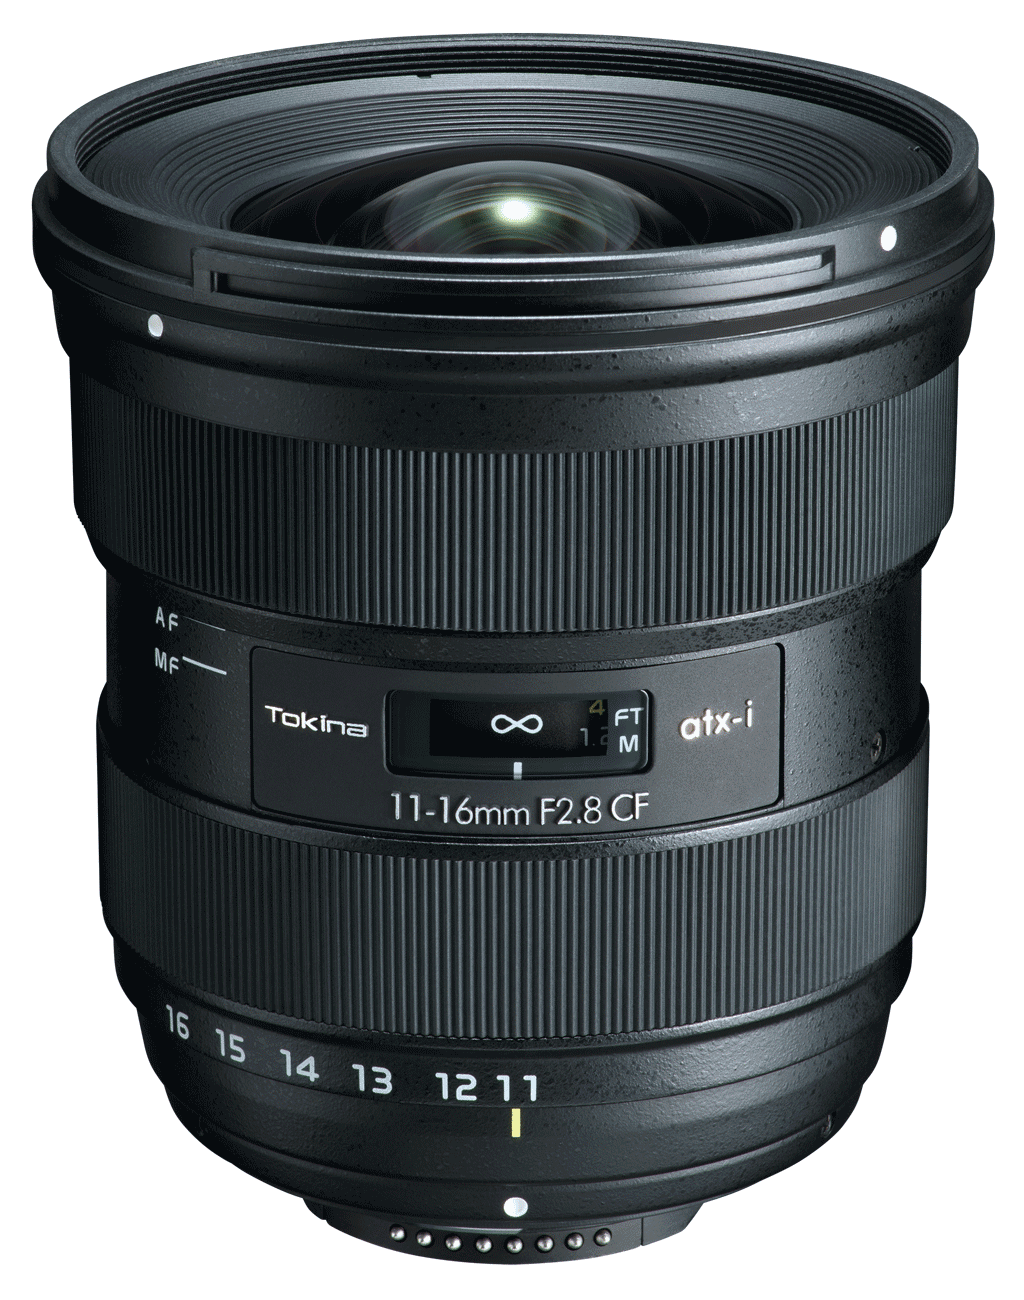 Tokina atx-i 11-16mm f/2.8 CF Plus